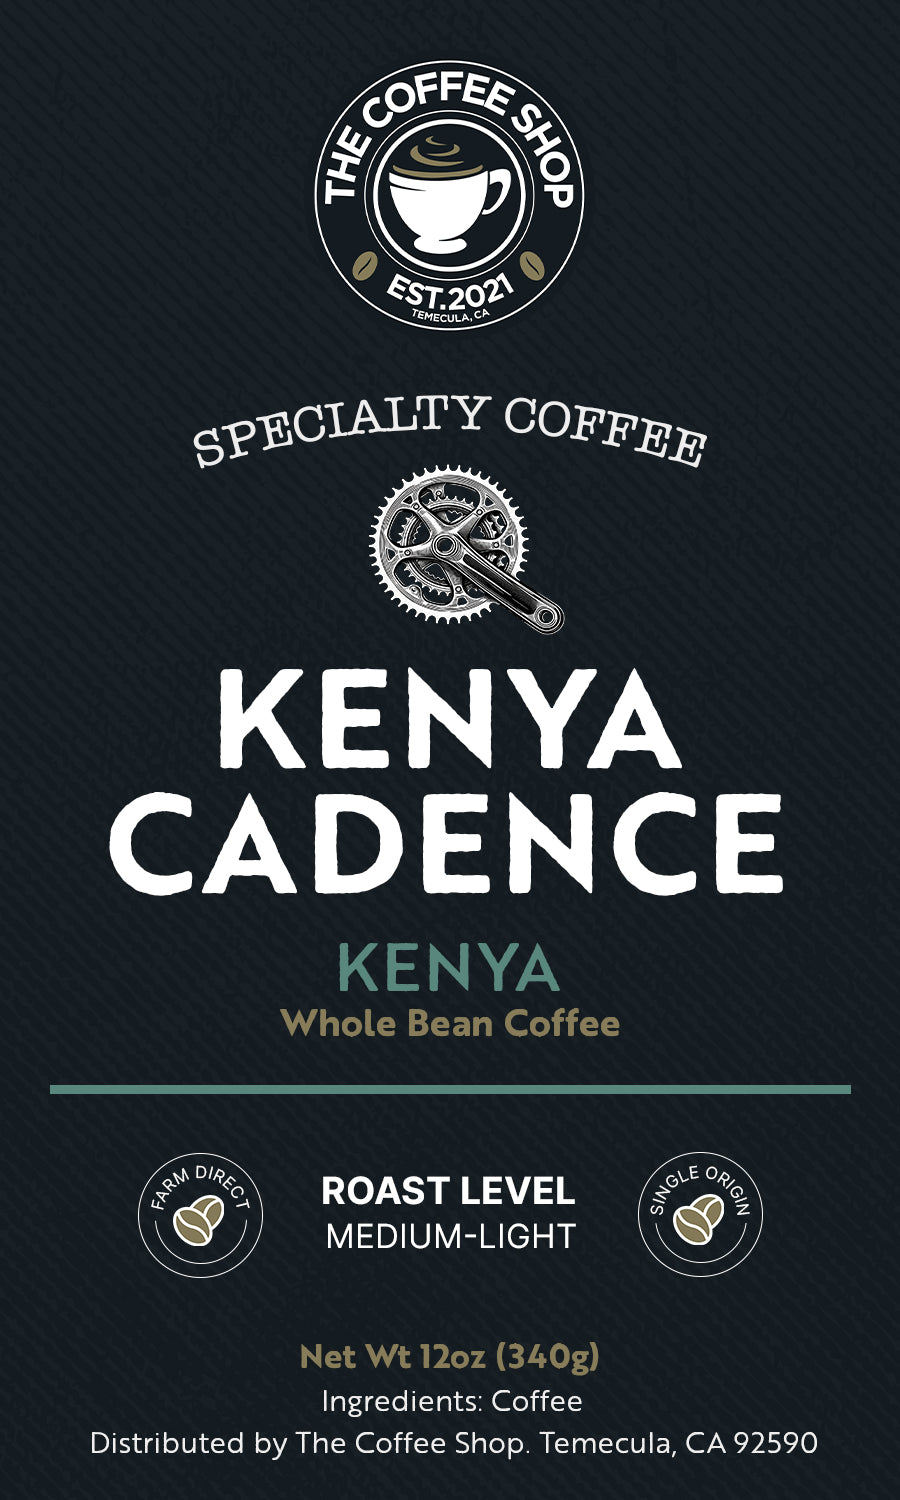 Kenya Cadence Specialty Coffee